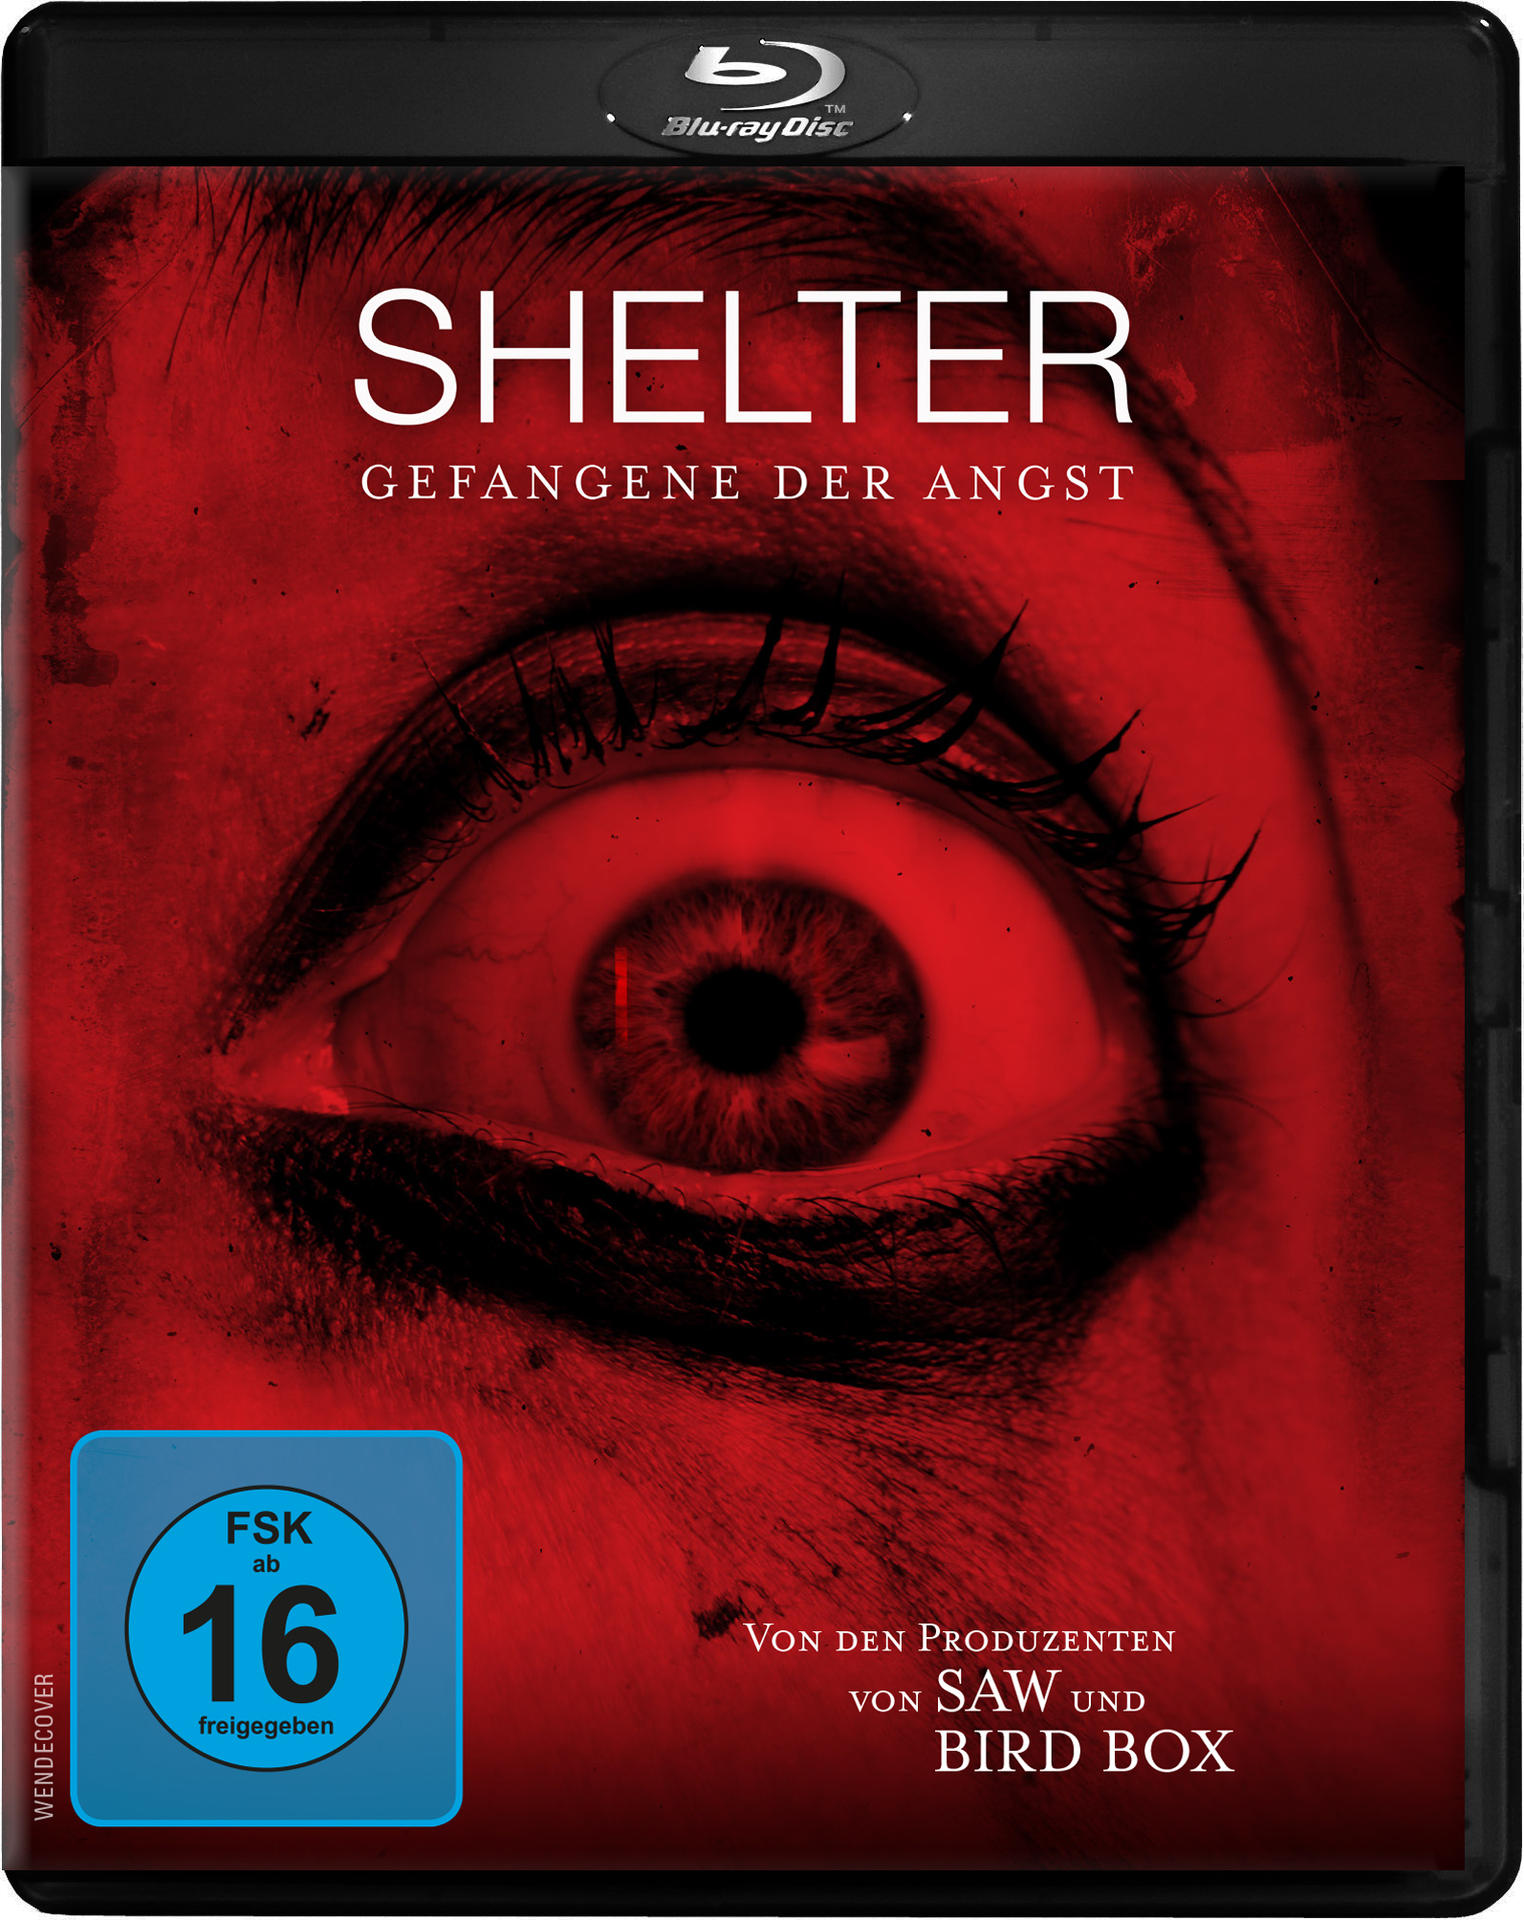 Gefangene - der Shelter Angst Blu-ray